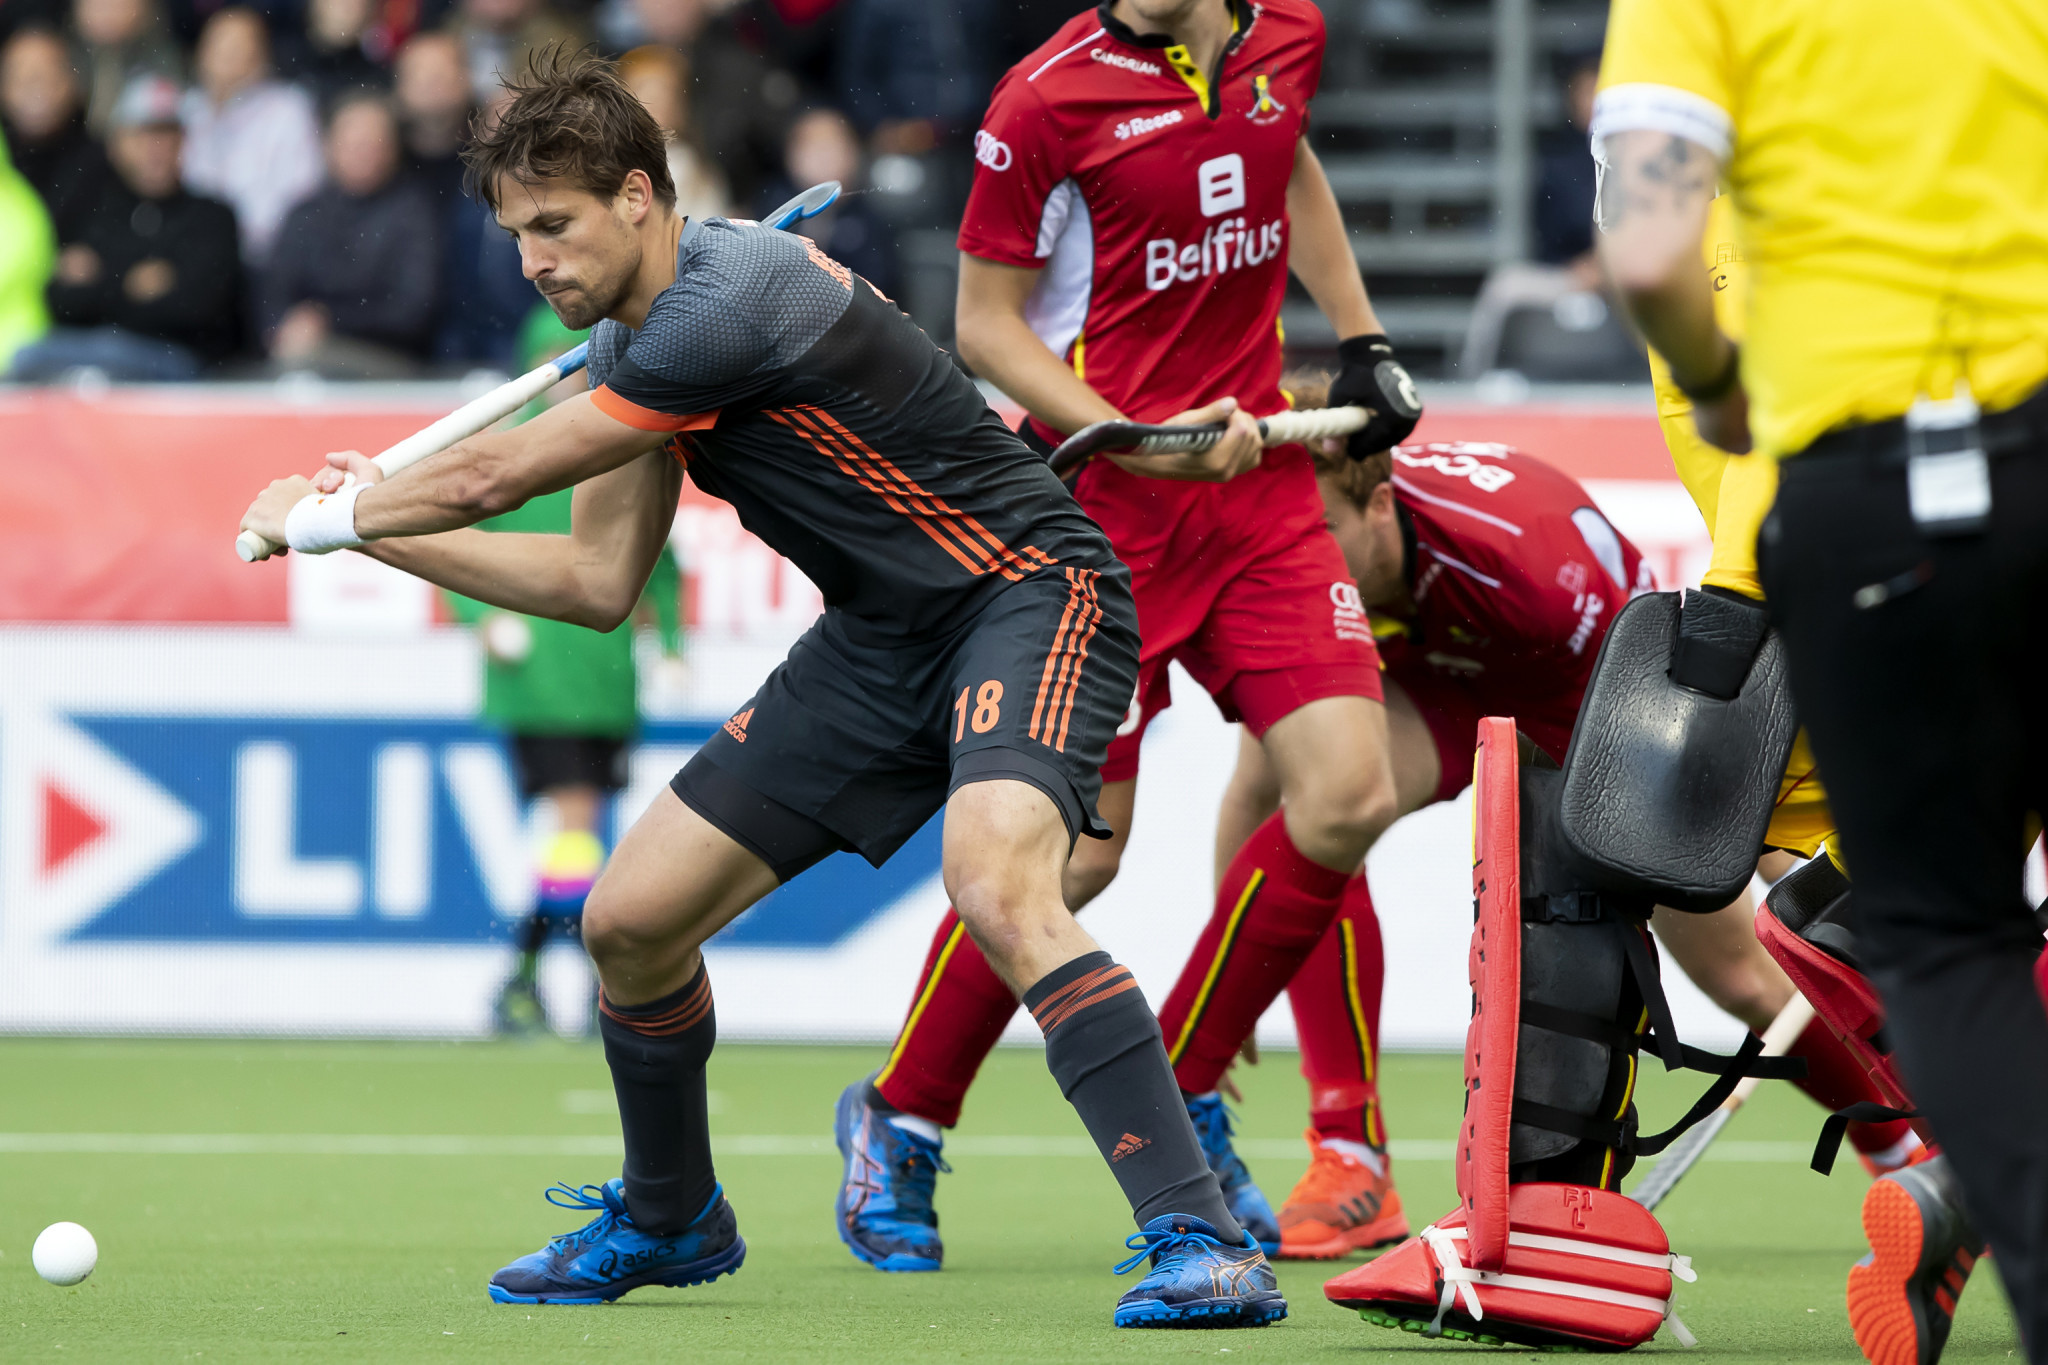 The Netherlands beat world champions Belgium 4-0 in Antwerp ©Getty Images